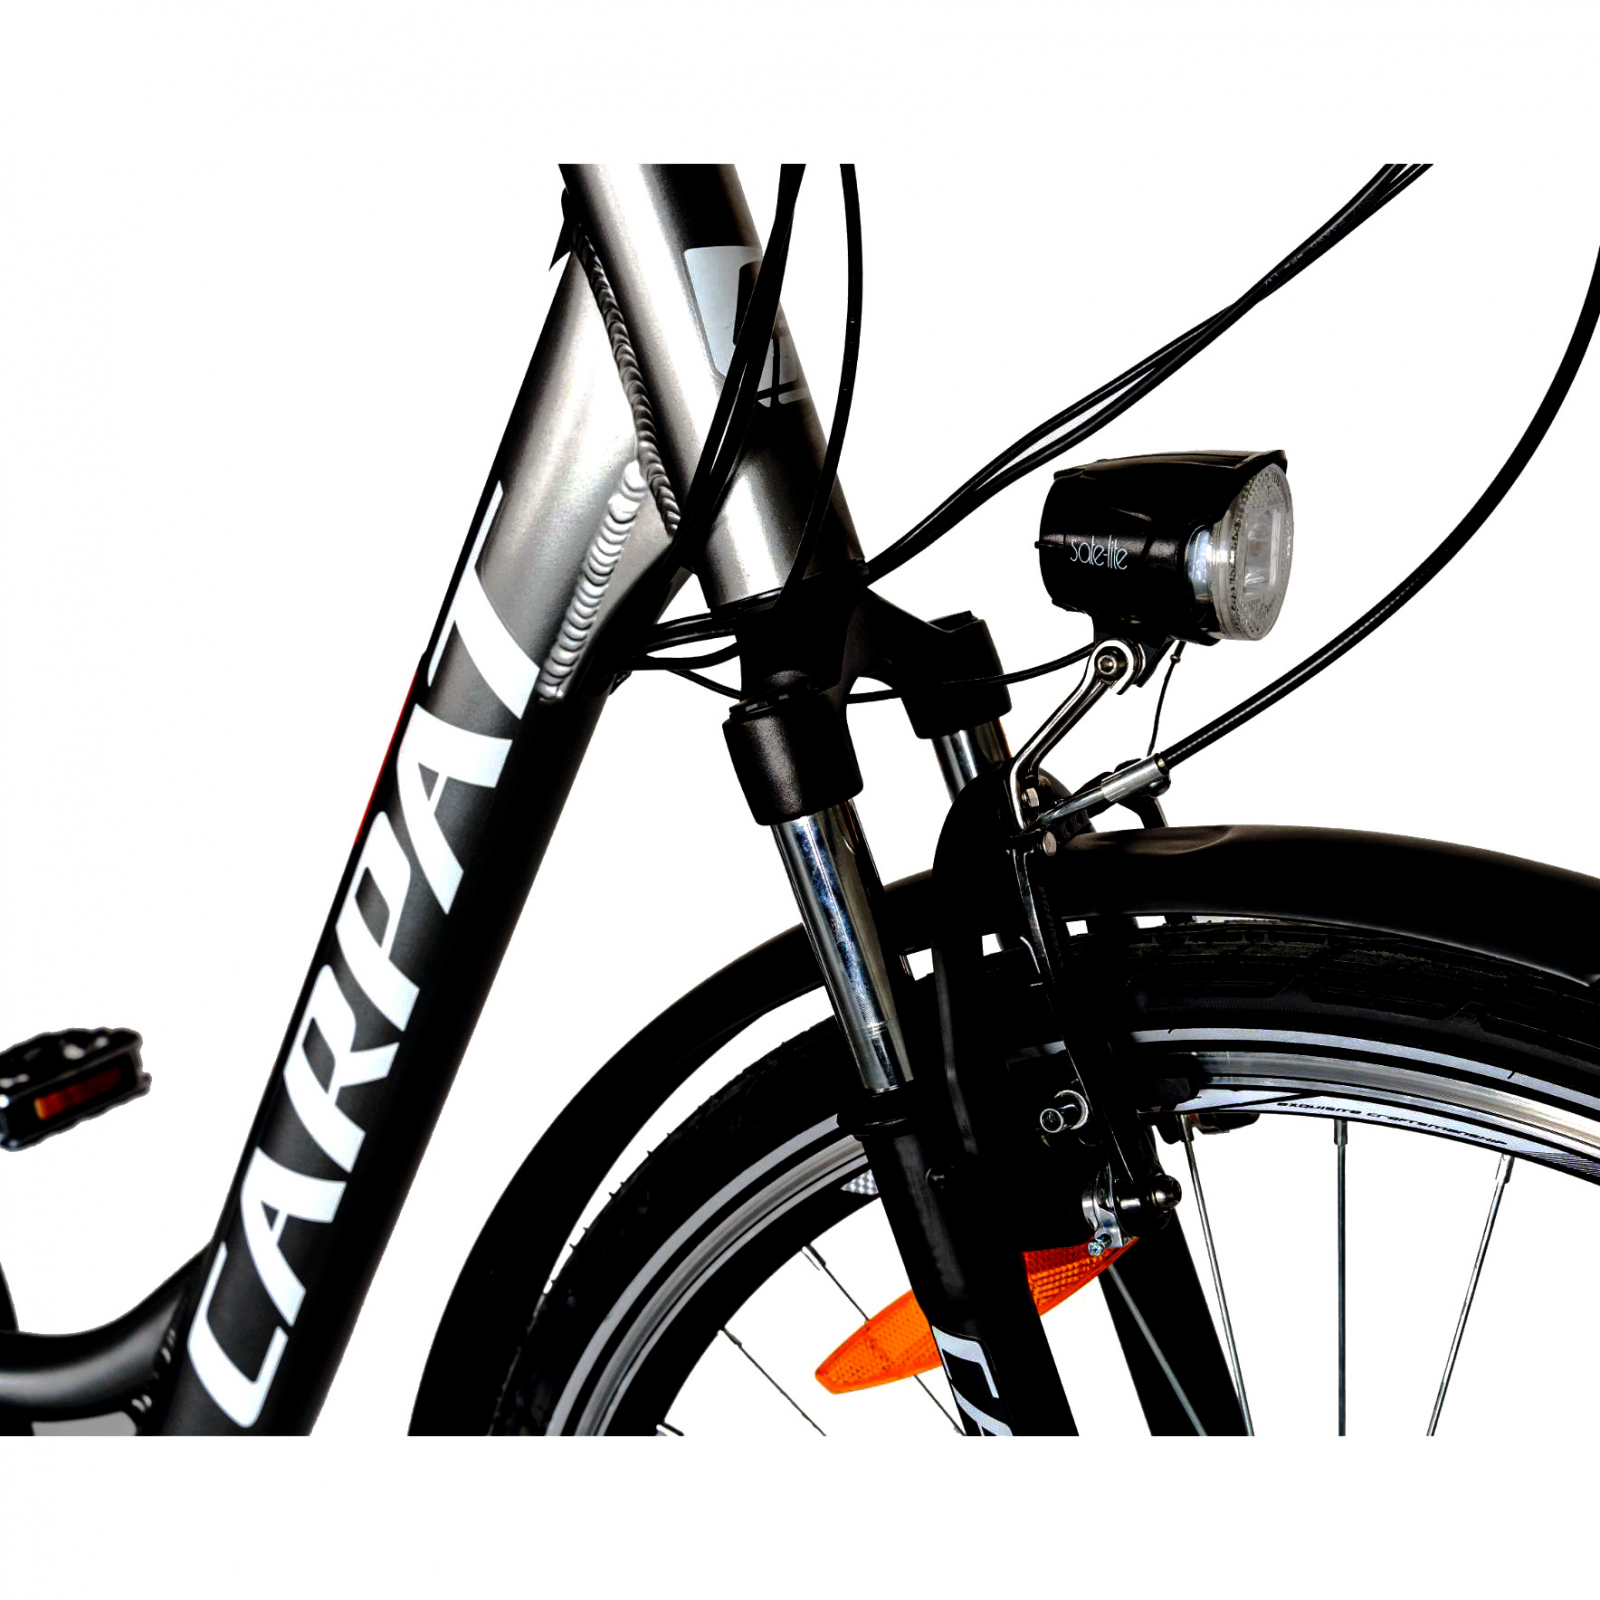 Bicicleta City (E-BIKE) CARPAT C1010E, roata 28", frane V-Brake, transmisie SHIMANO 7 viteze, culoare negru/alb